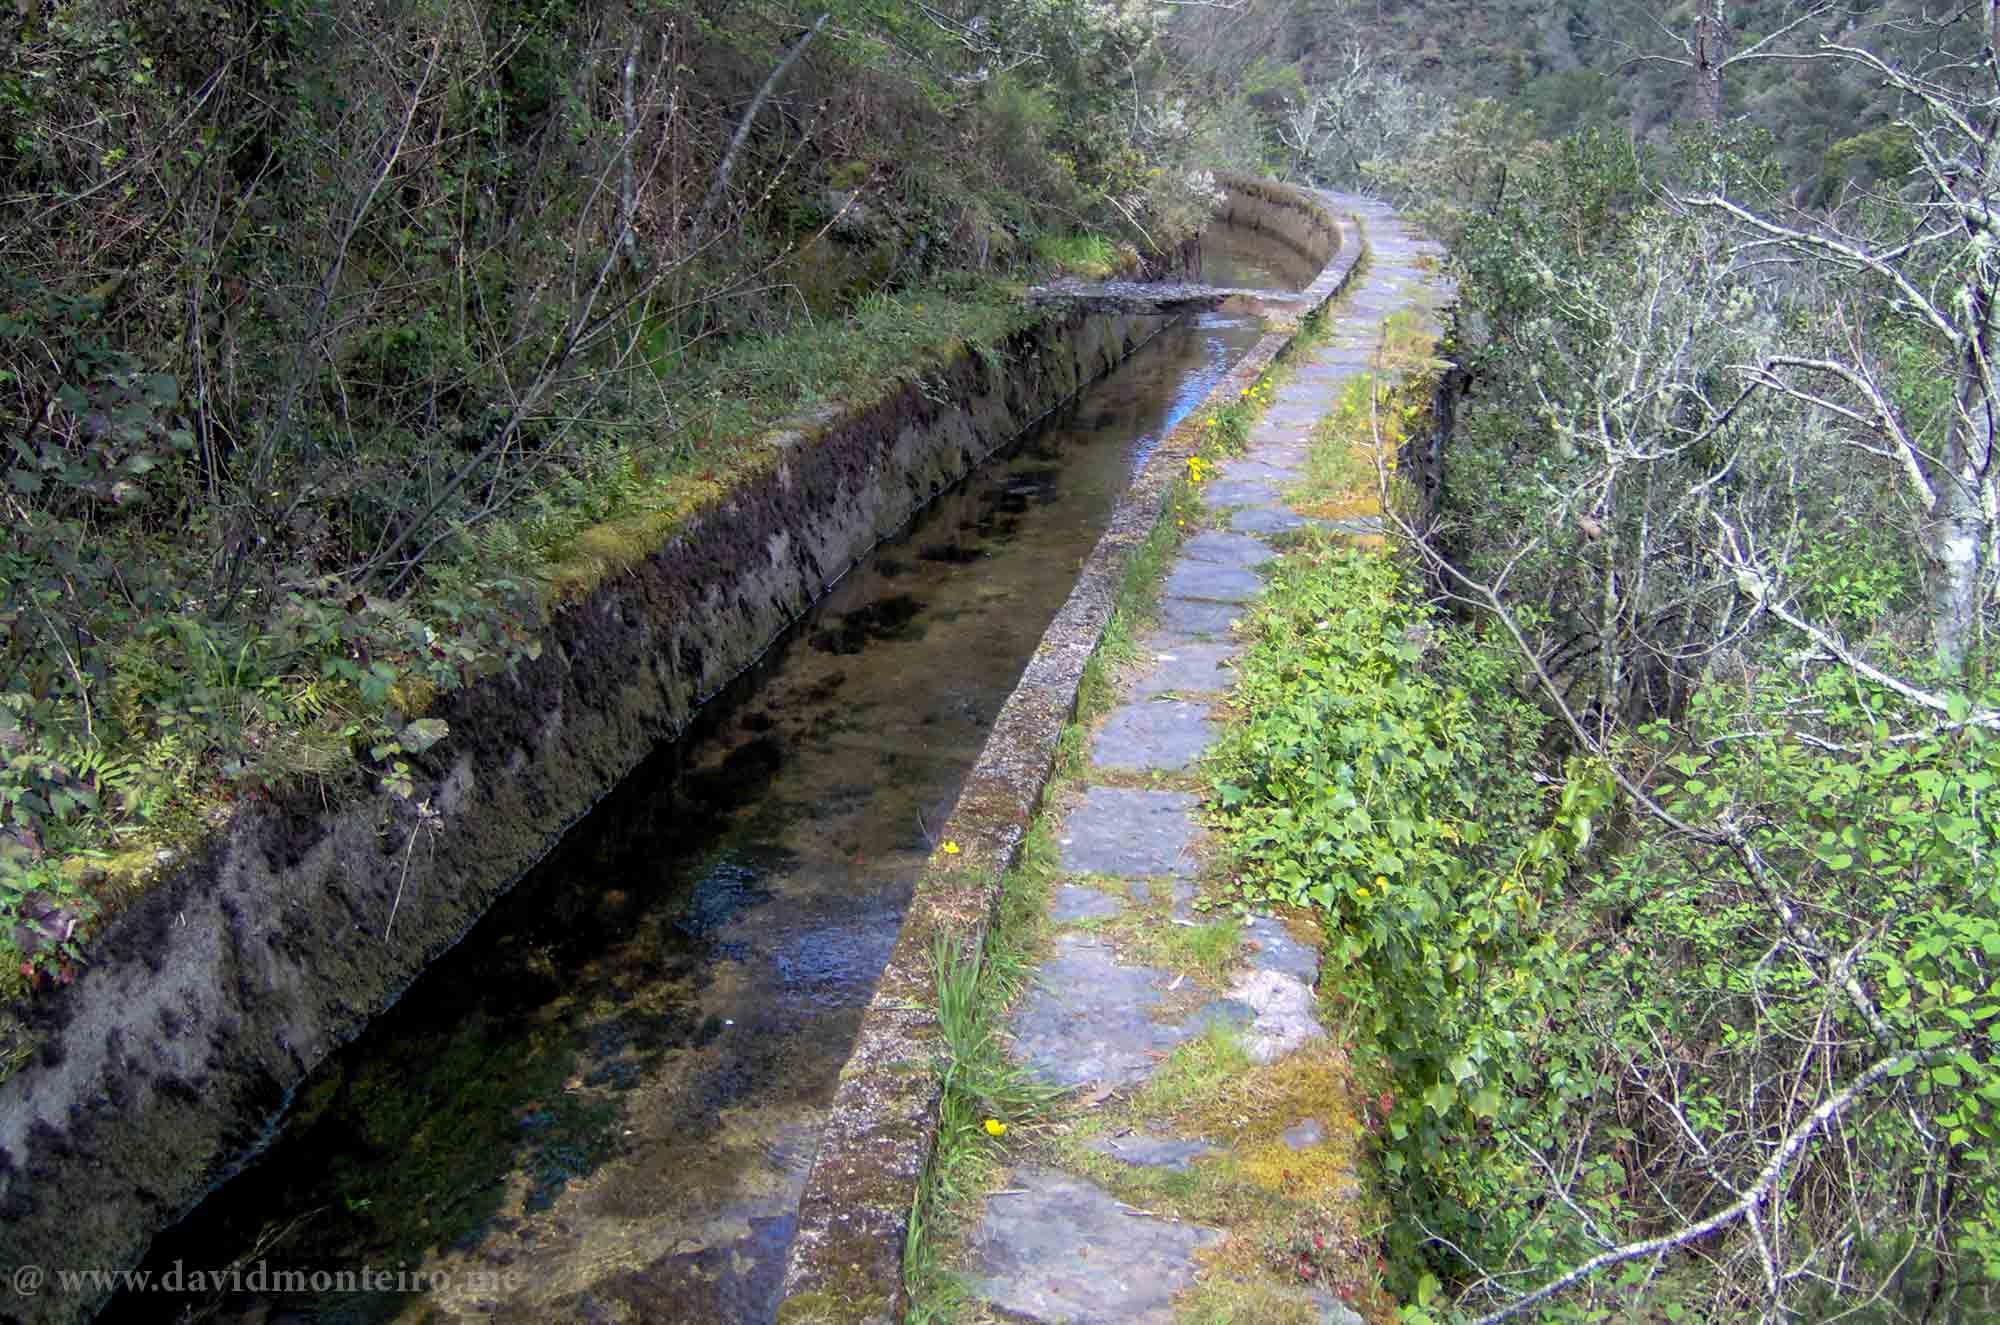 Walking on the Lousã's aqueduct